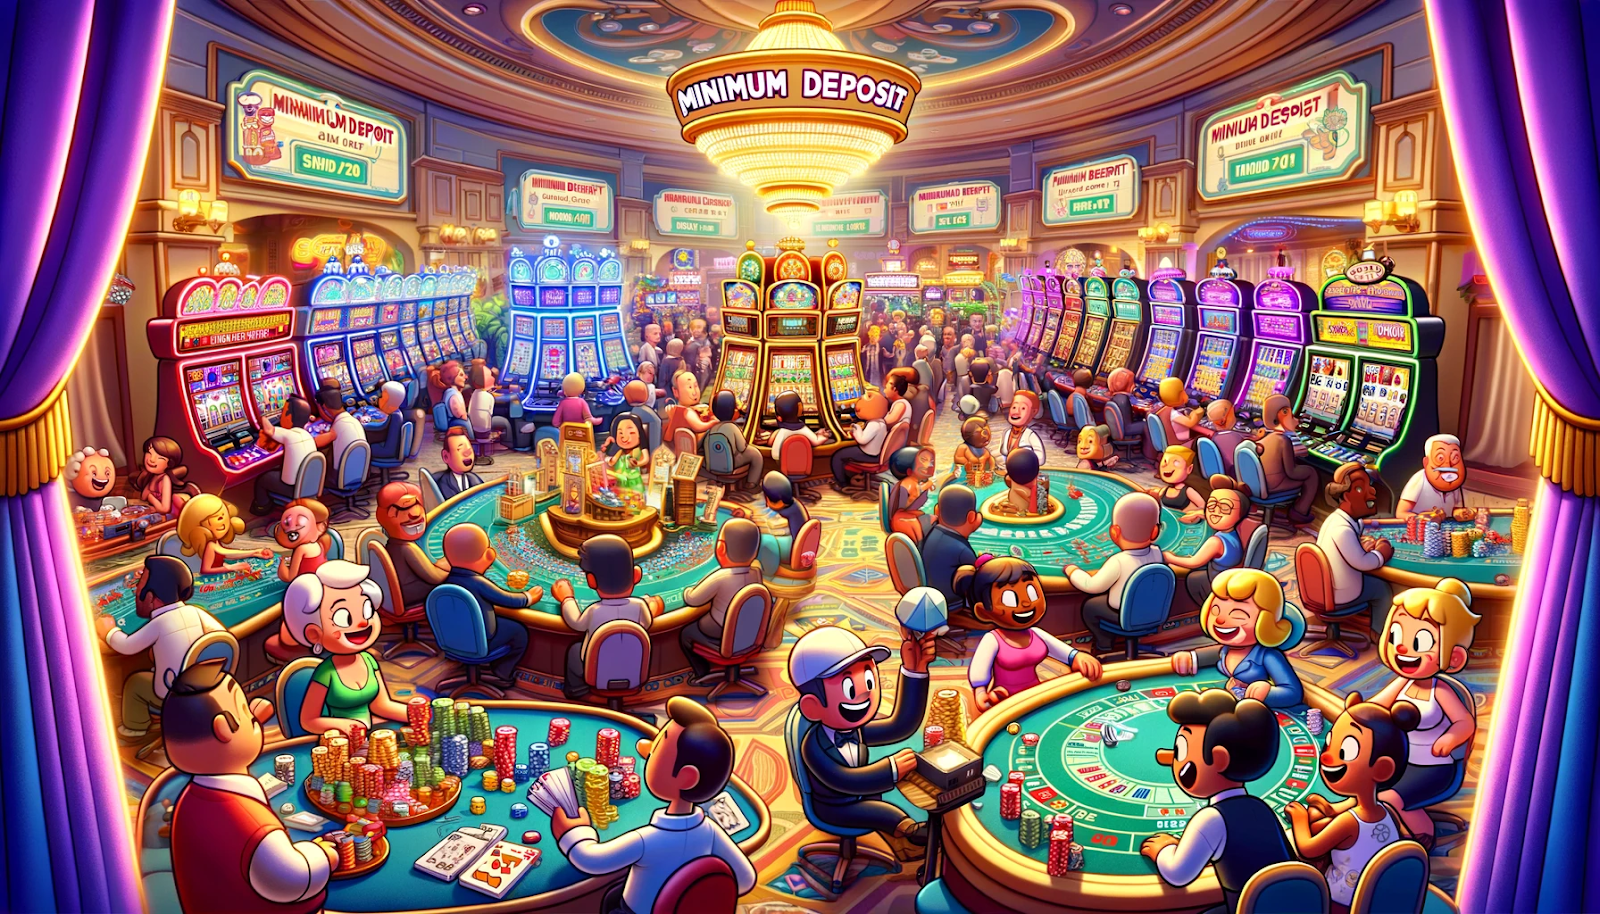 Popular Minimum Deposit Online Casinos: From No Deposit to $10 Options